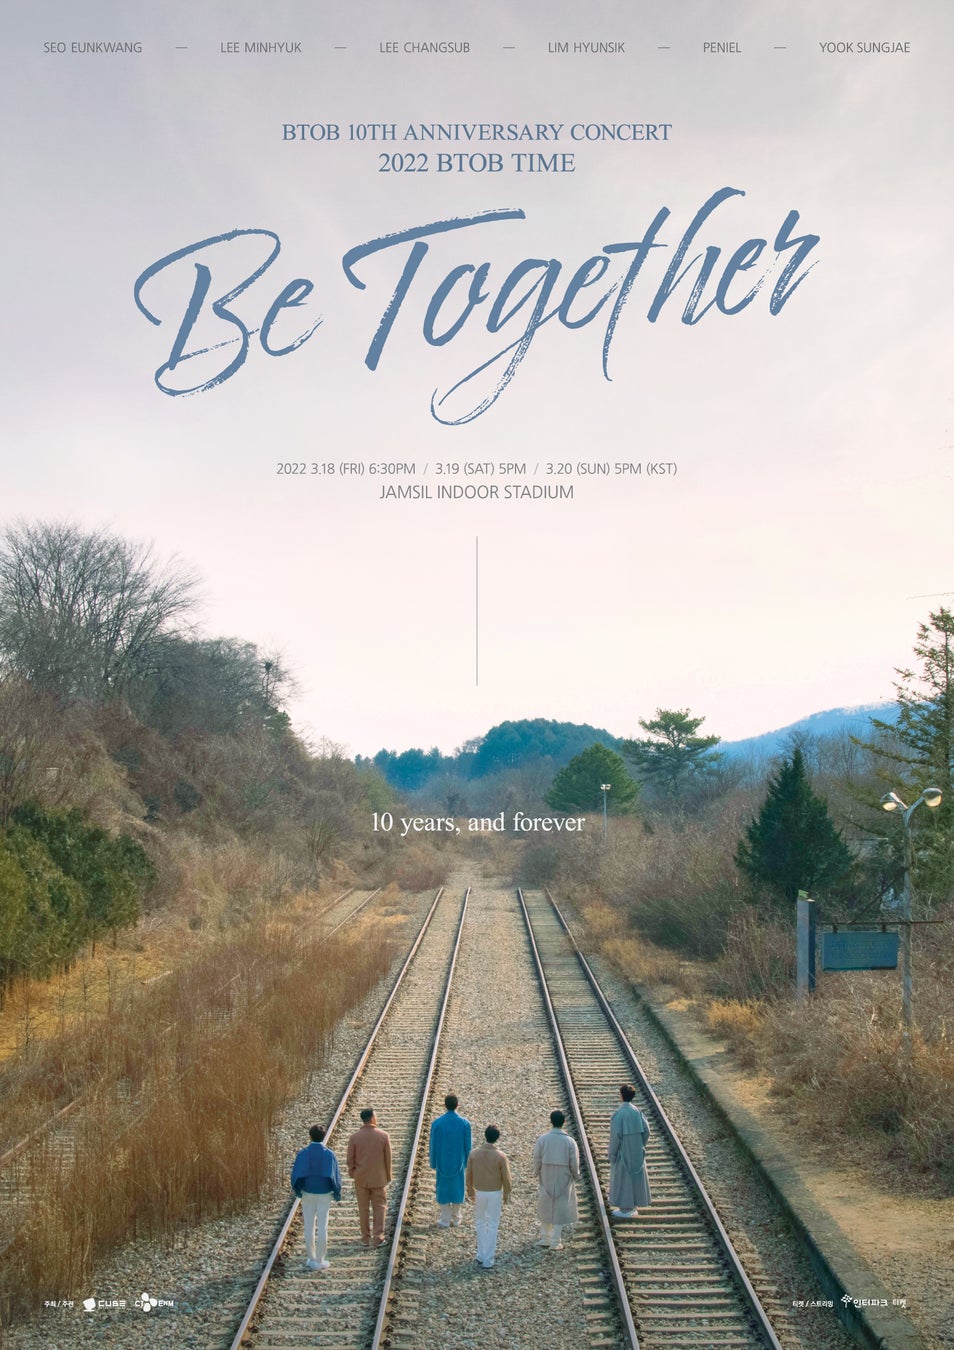 BTOBデビュー10周年コンサート BTOB 10TH ANNIVERSARY CONCERT 2022 BTOB TIME [Be Together] 開催決定